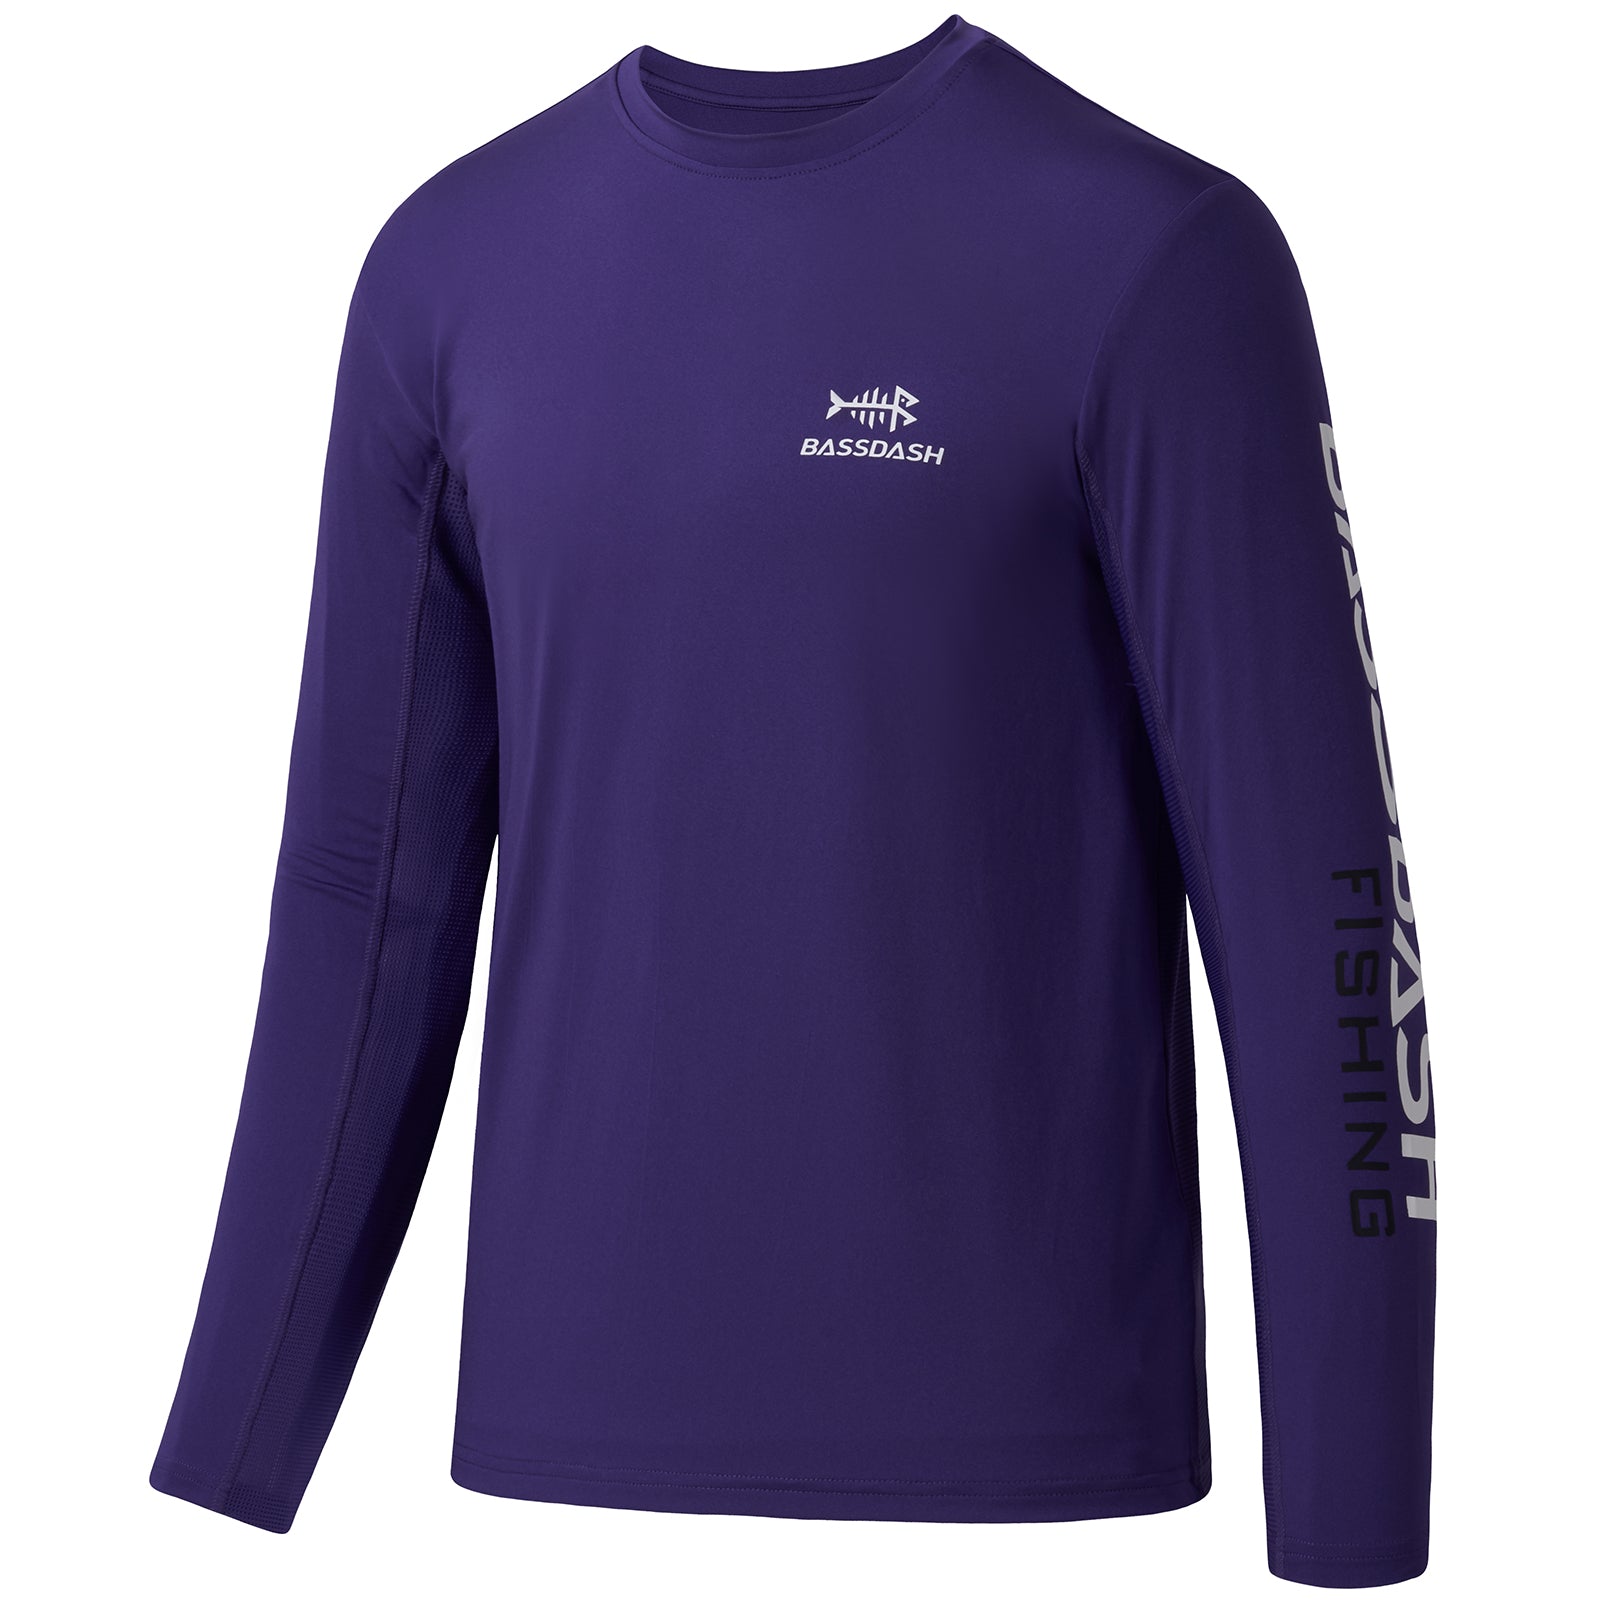 Bassdash UPF 50+ Youth Fishing Shirt Long Sleeve Performance UV Protection Shirt for Boys Girls Purple/White Logo / XL